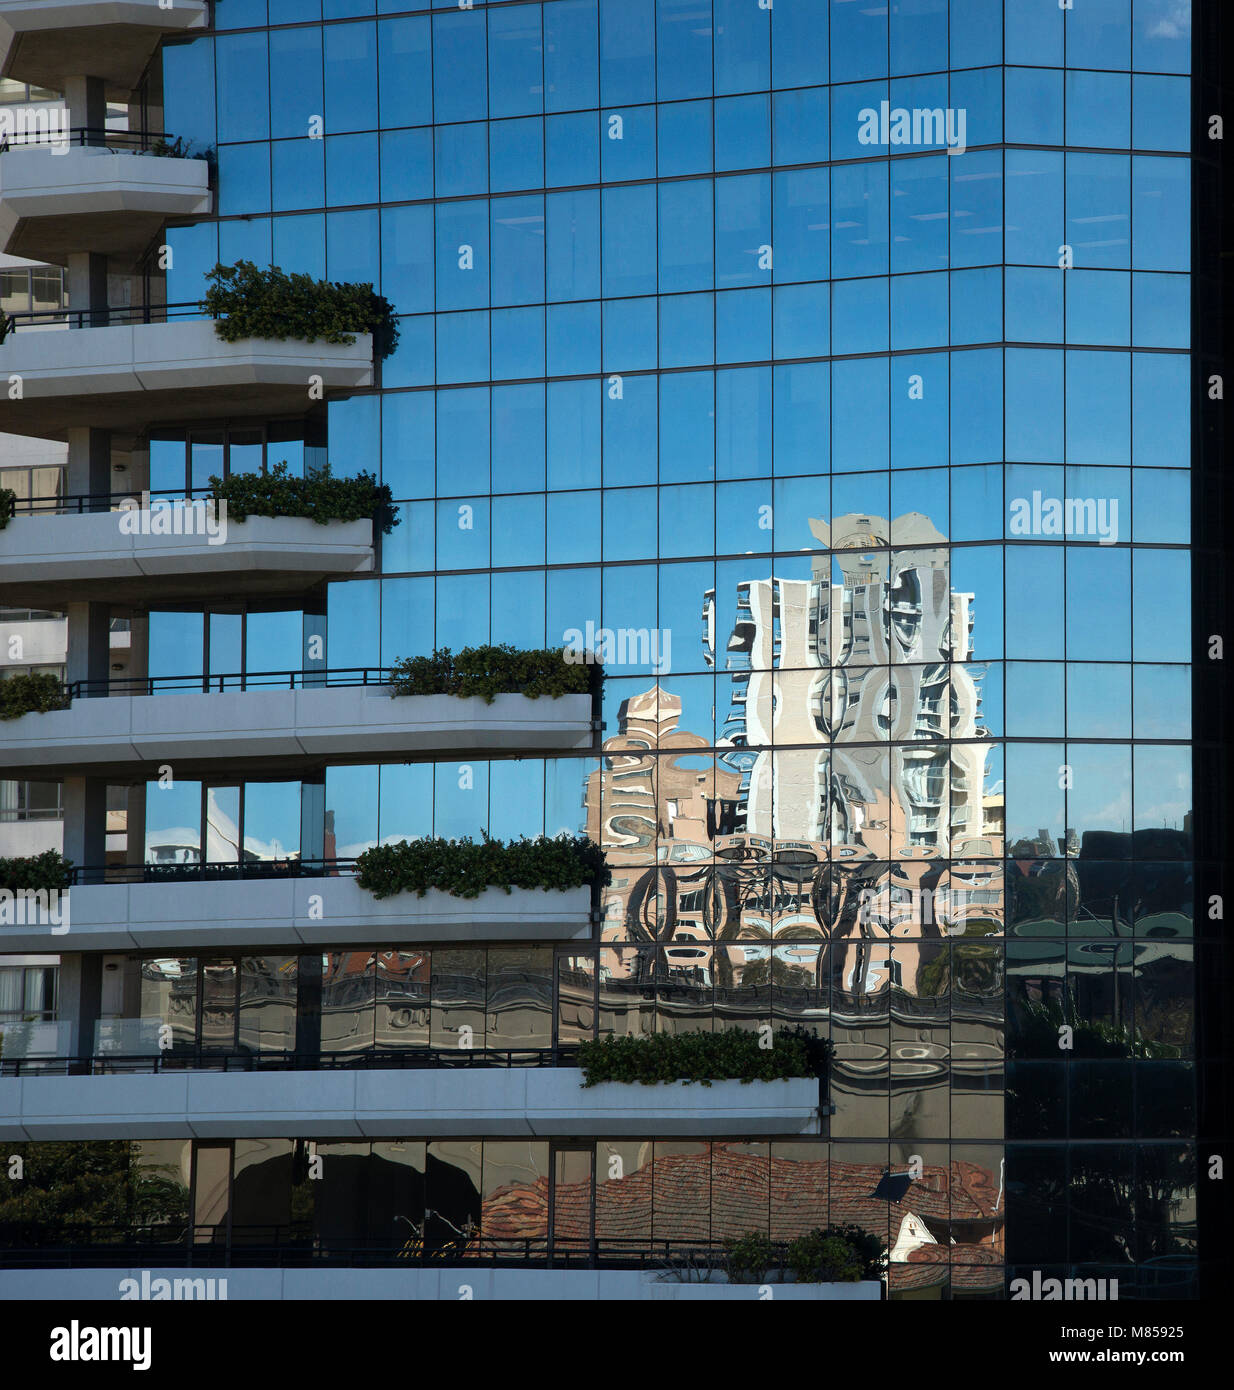 Buildings reflected in building windows, Sydney, Australia Stock Photo